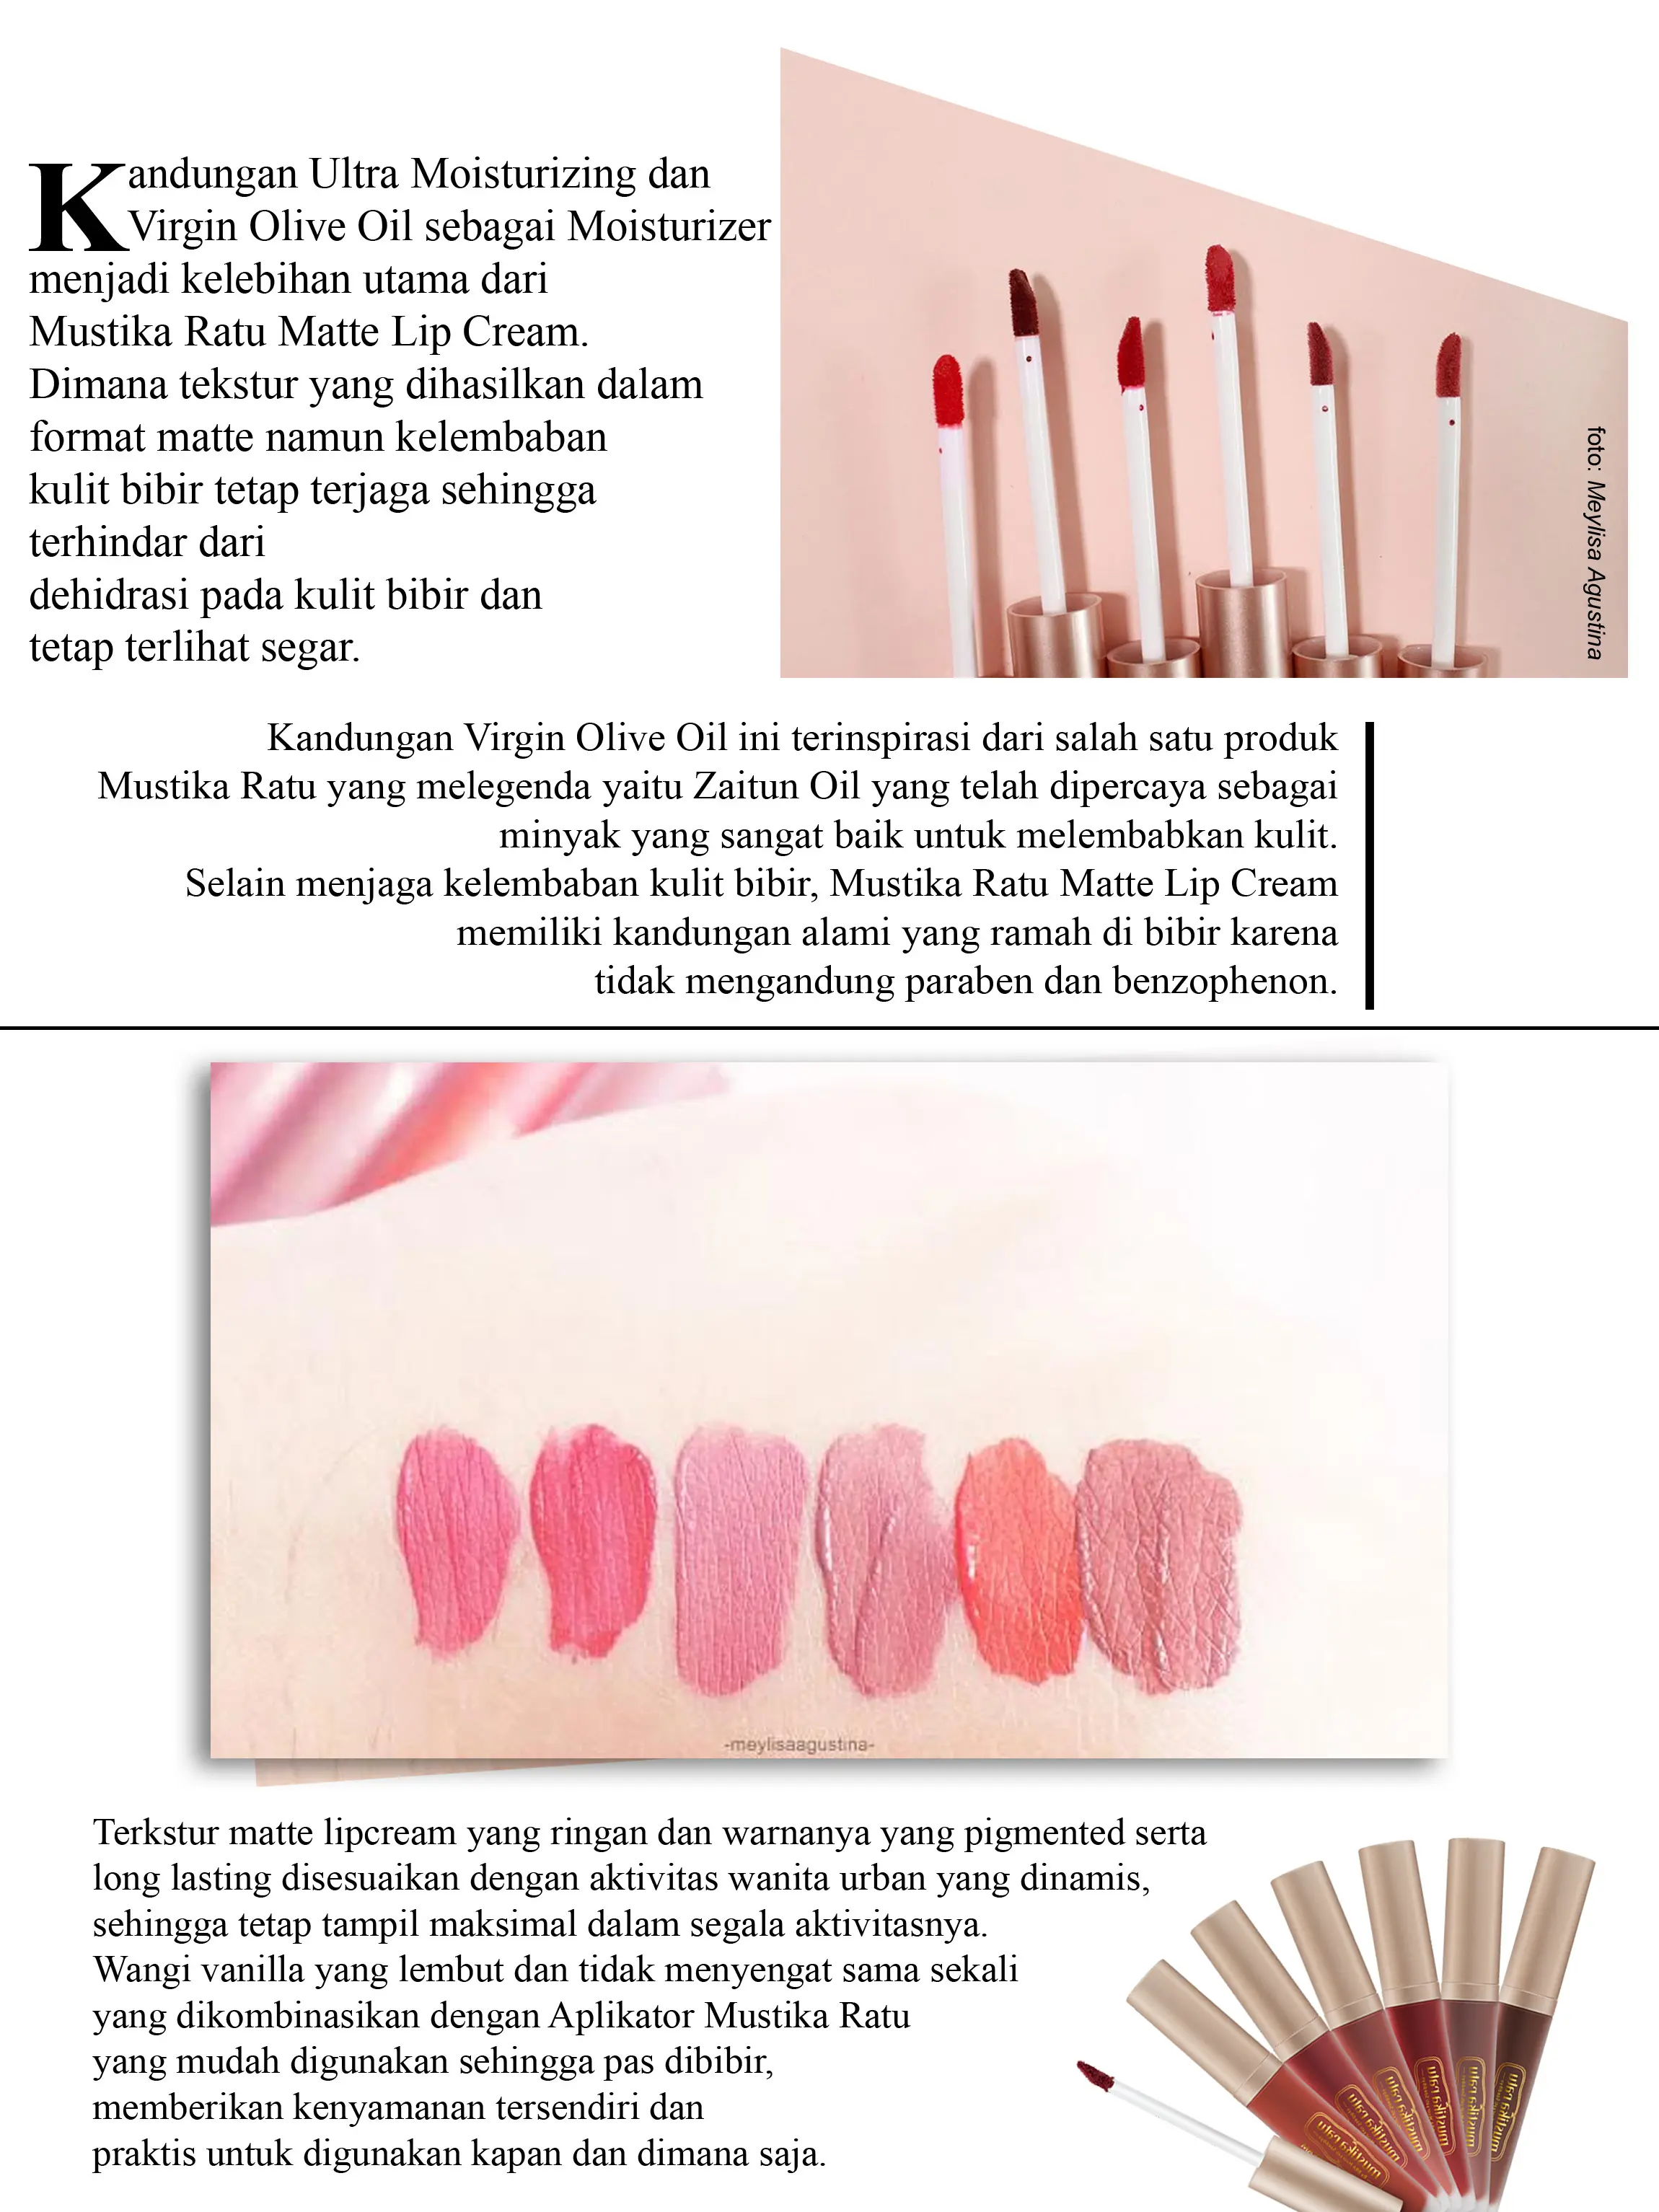 Mustika Ratu Hadirkan Matte Lip Cream Ultra Moisturizing. (Foto: Meylisa Agustina, Digital Imaging: Nurman Abdul Hakim/Bintang.com)